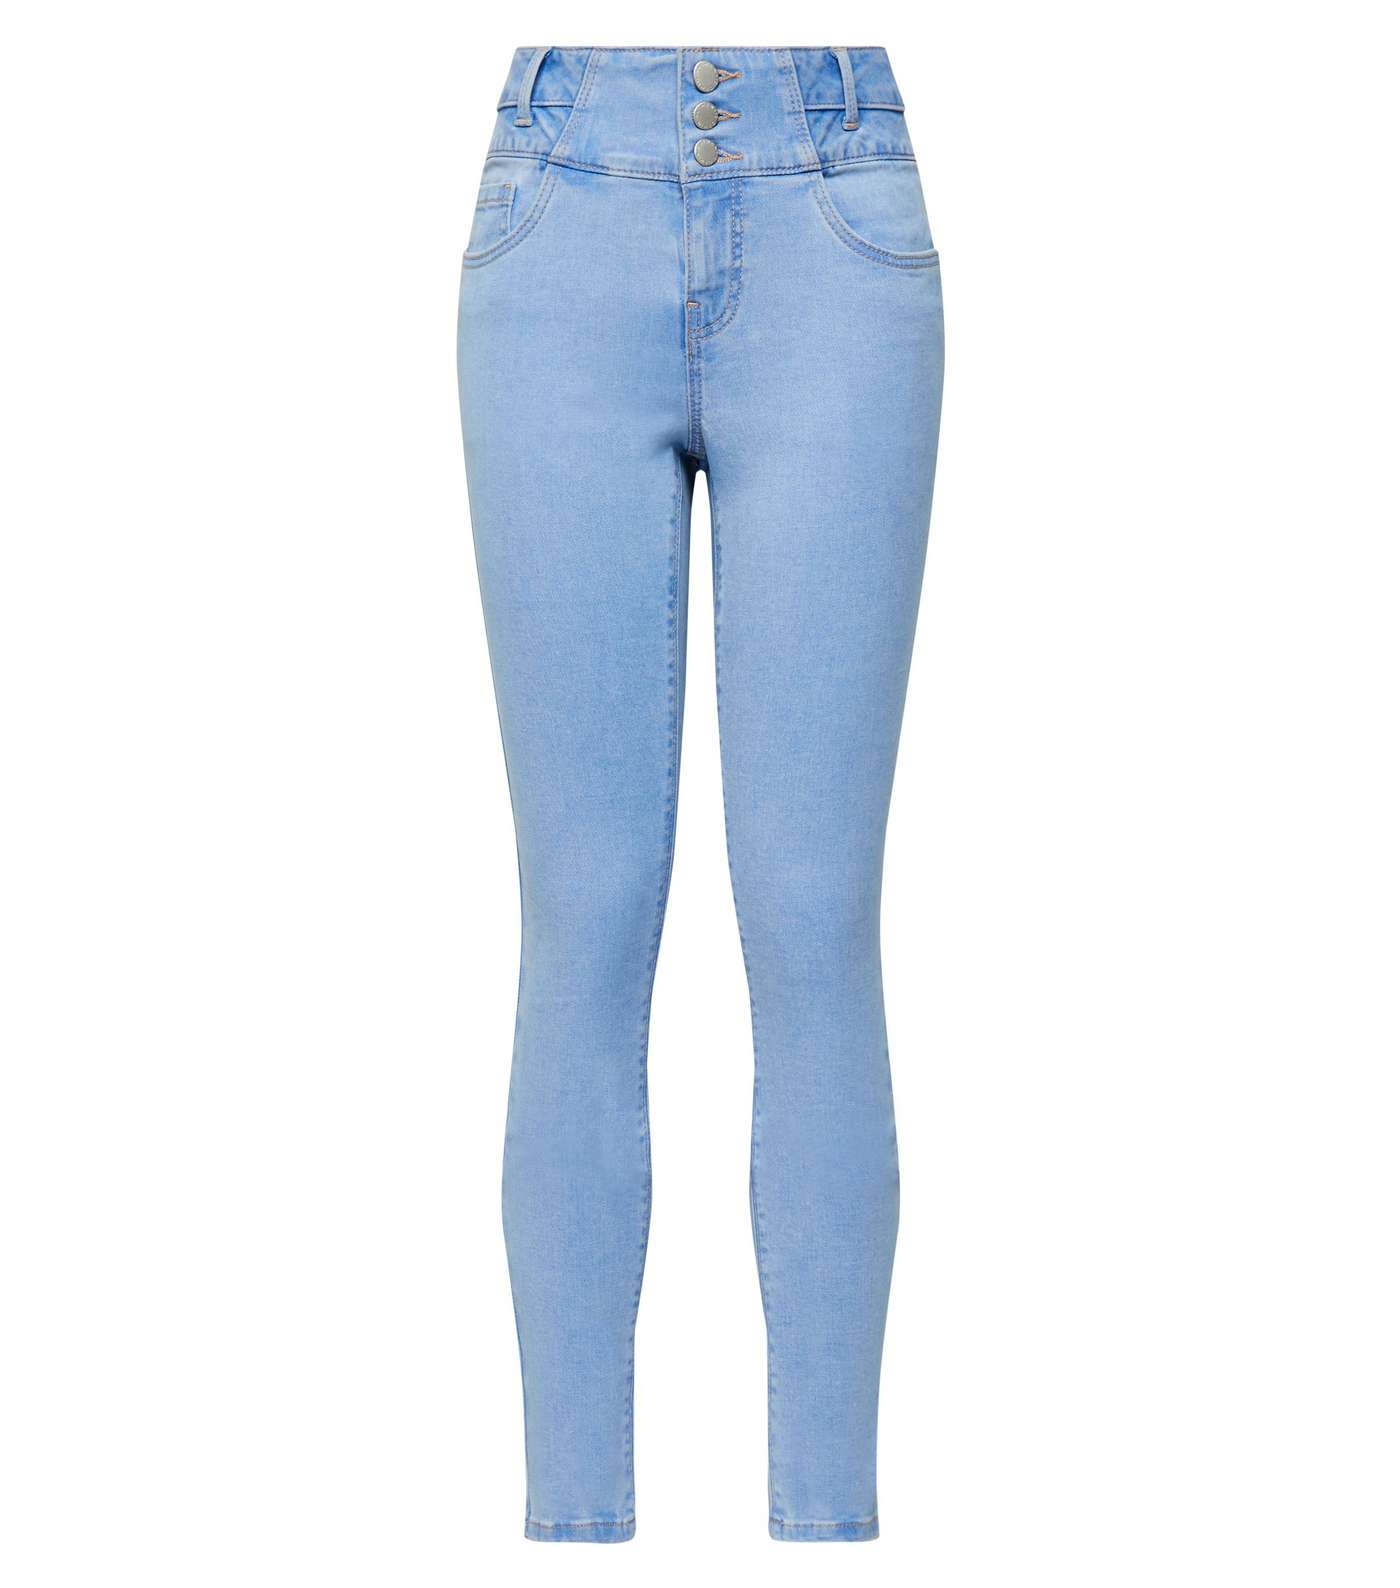 Girls Pale Blue High Waist Skinny Jeans Image 4